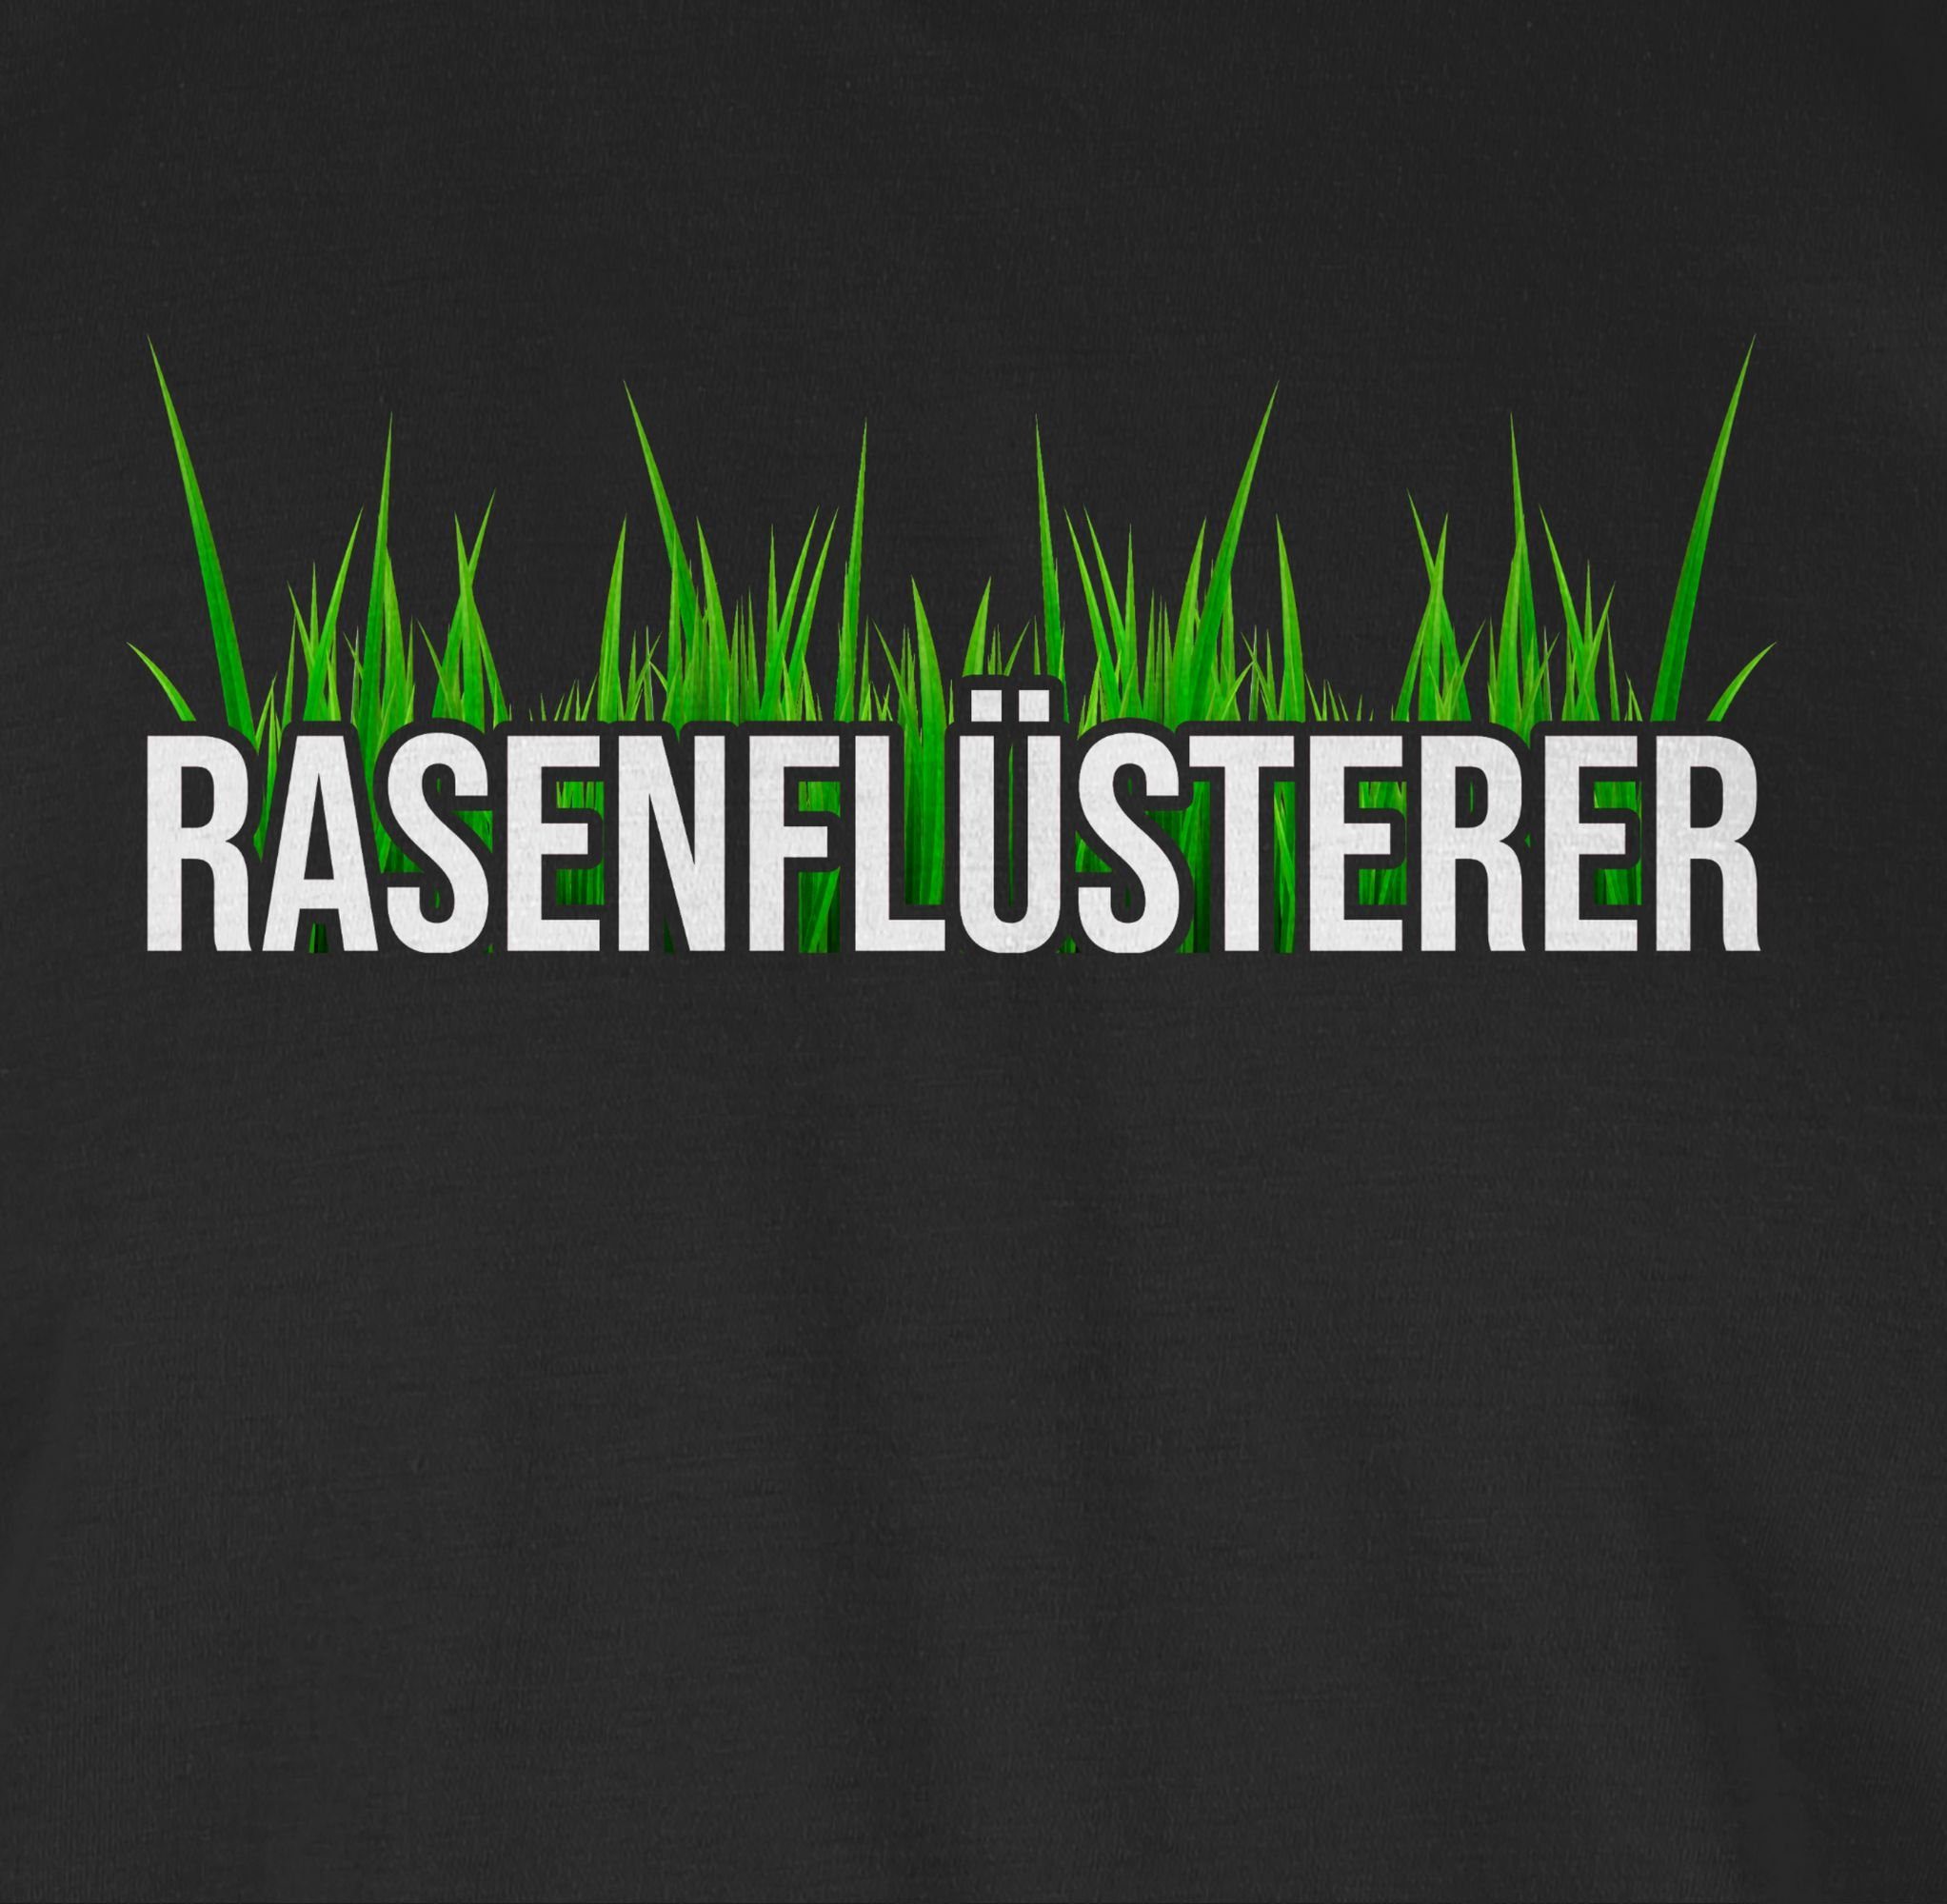 Shirtracer T-Shirt Rasenflüsterer Hausmeister Geschenk 03 Schwarz